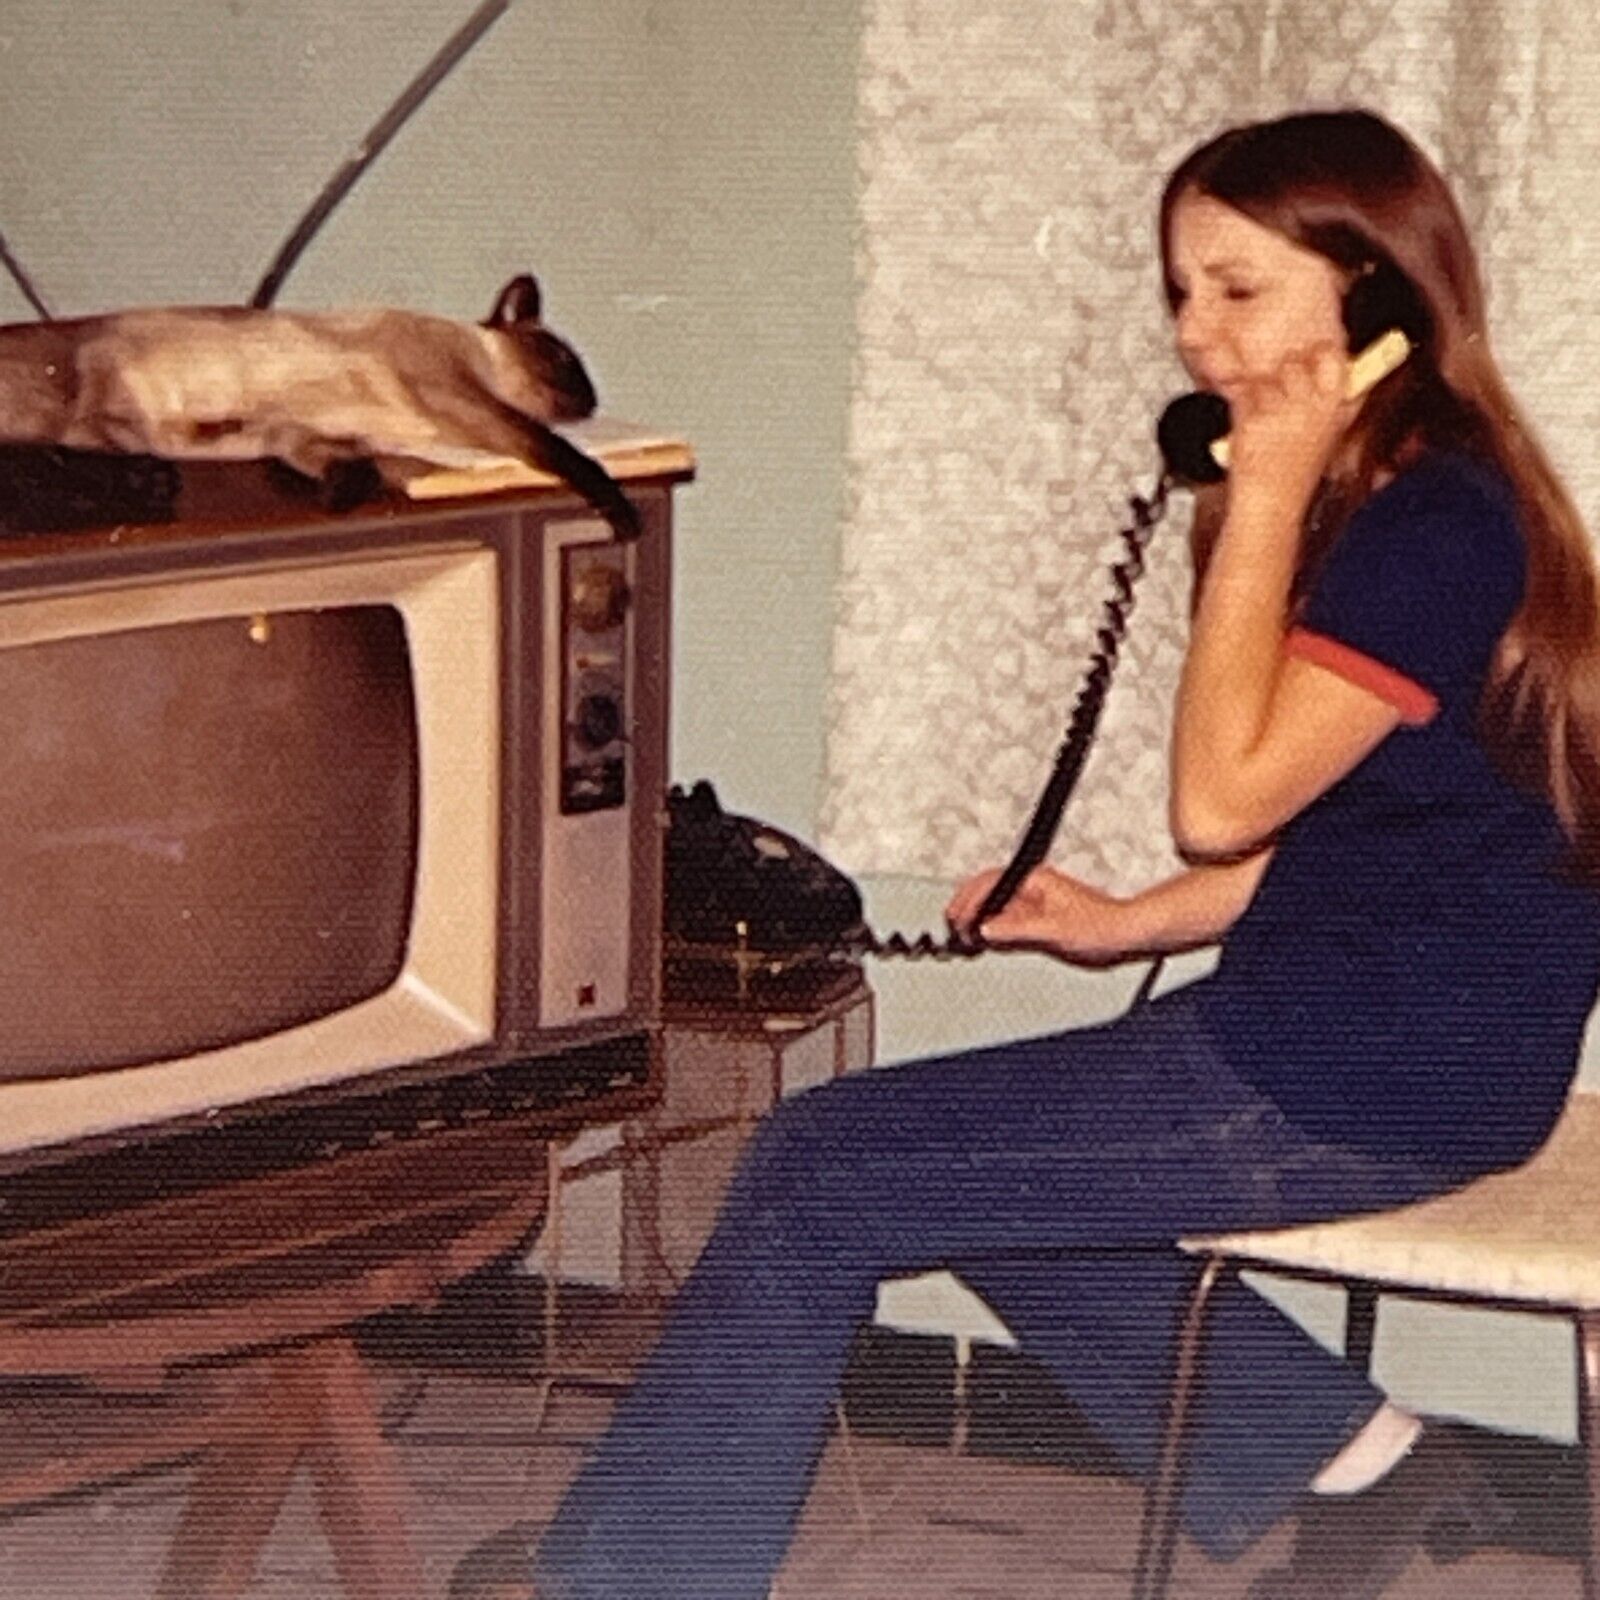 U8 Photograph Girl Talking On Corded Phone Siamese Cat Sleeping On Old TV